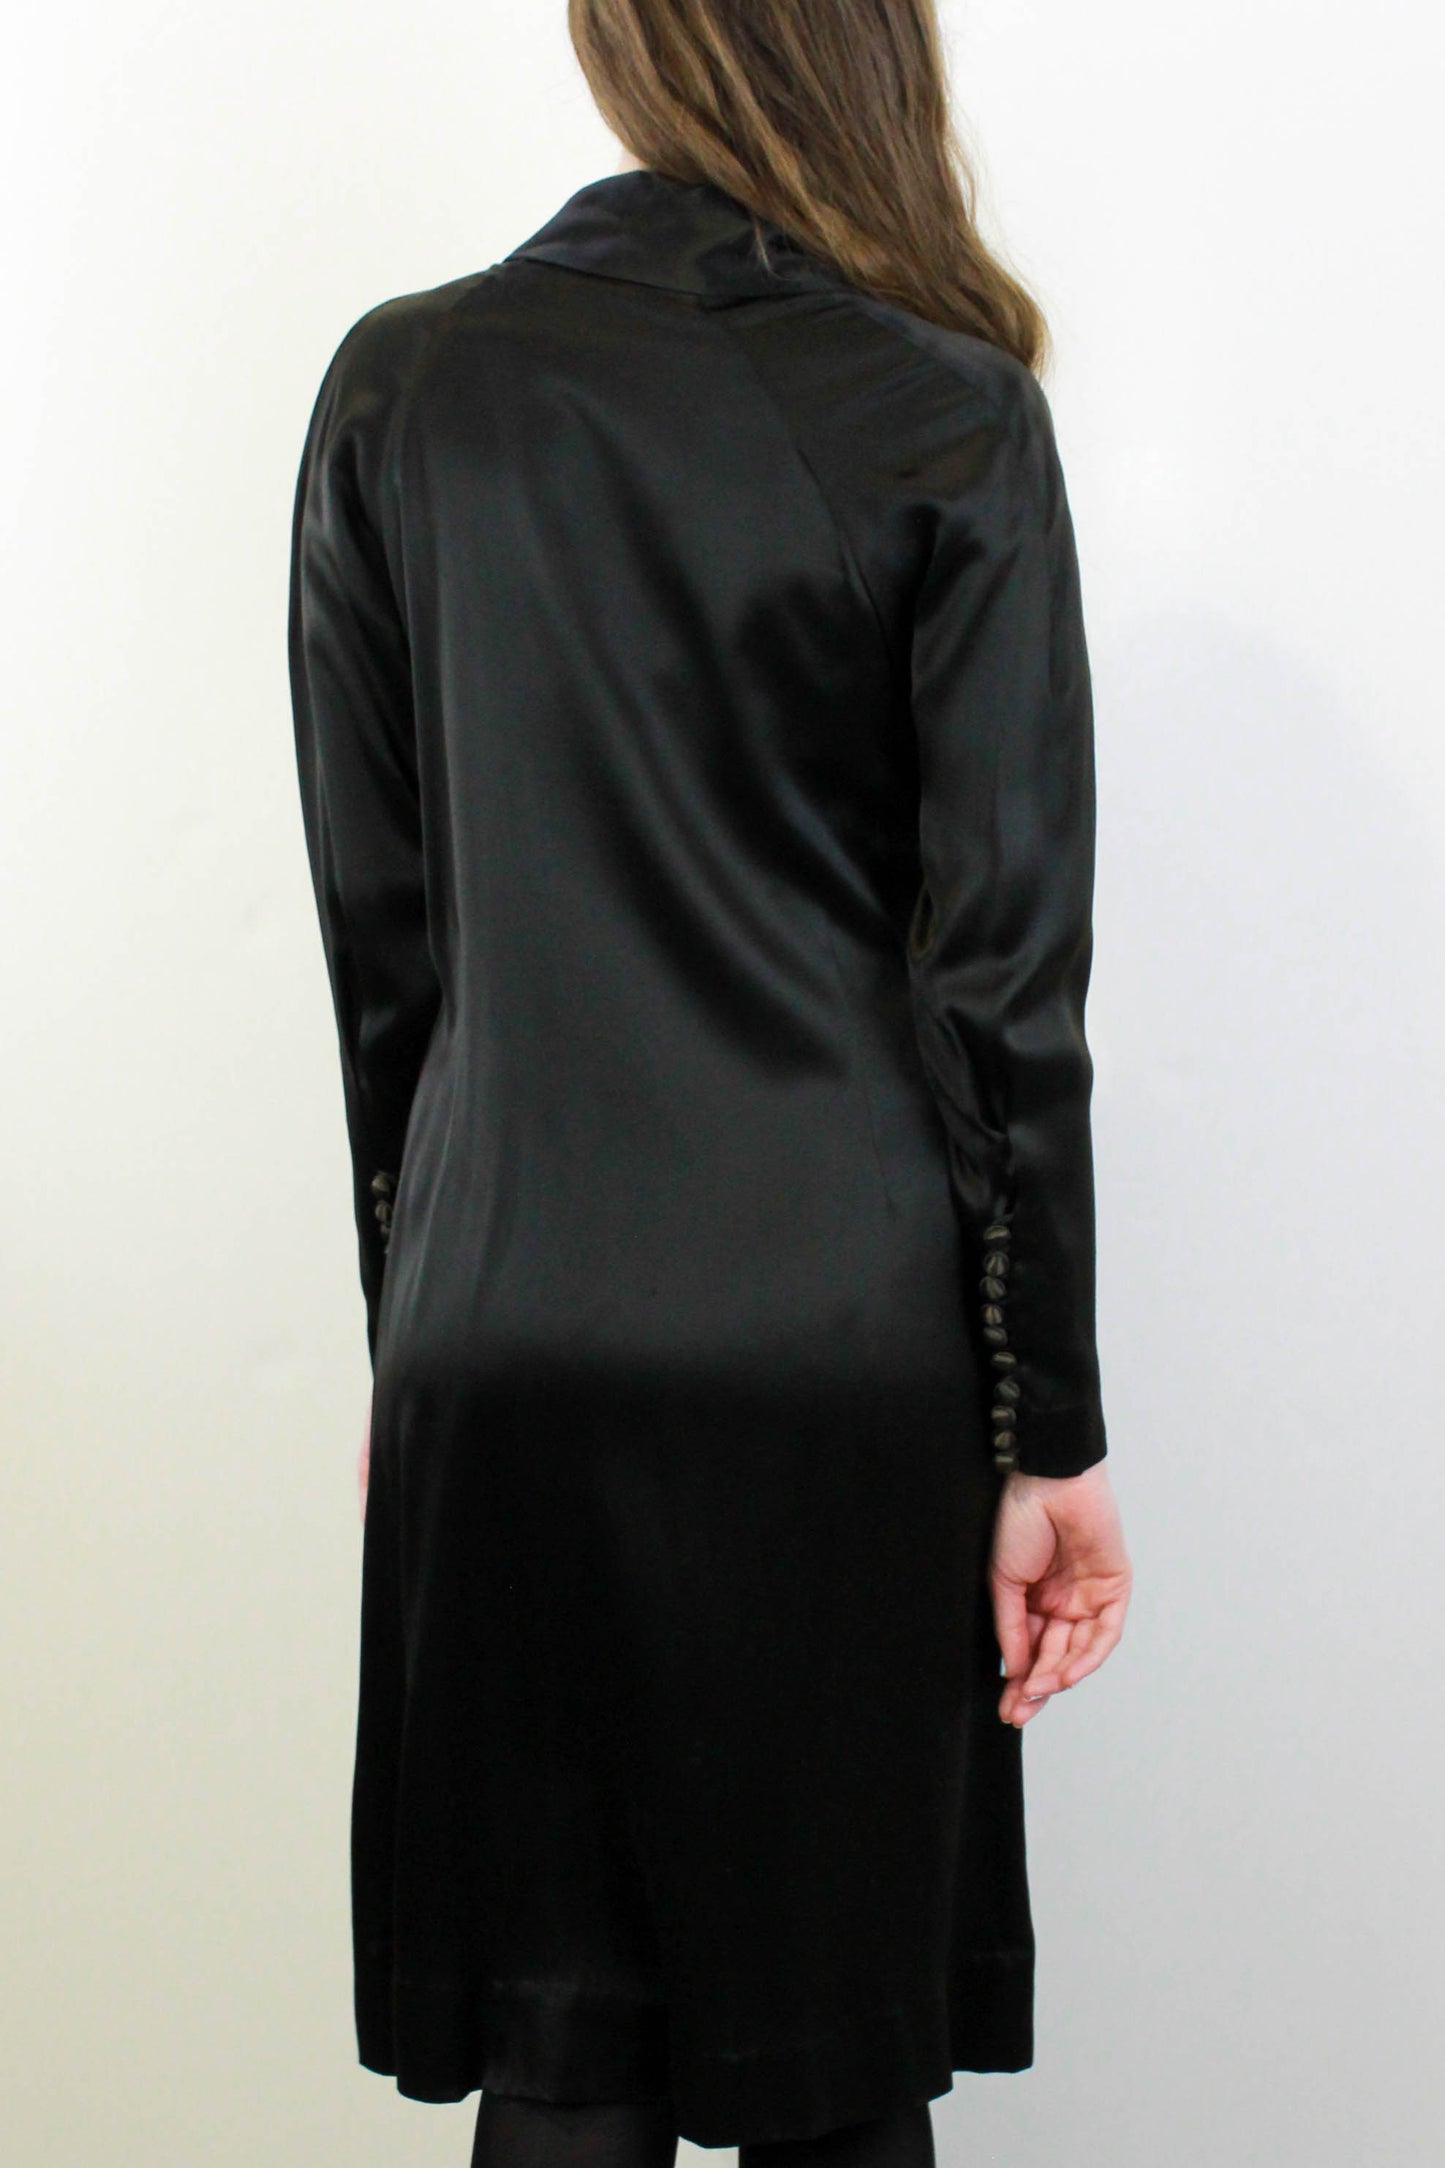 1930s Silk Satin Black Dress, Covered Buttons, Collared Neck, 1930s Liquid Satin Dress, Flapper Dress